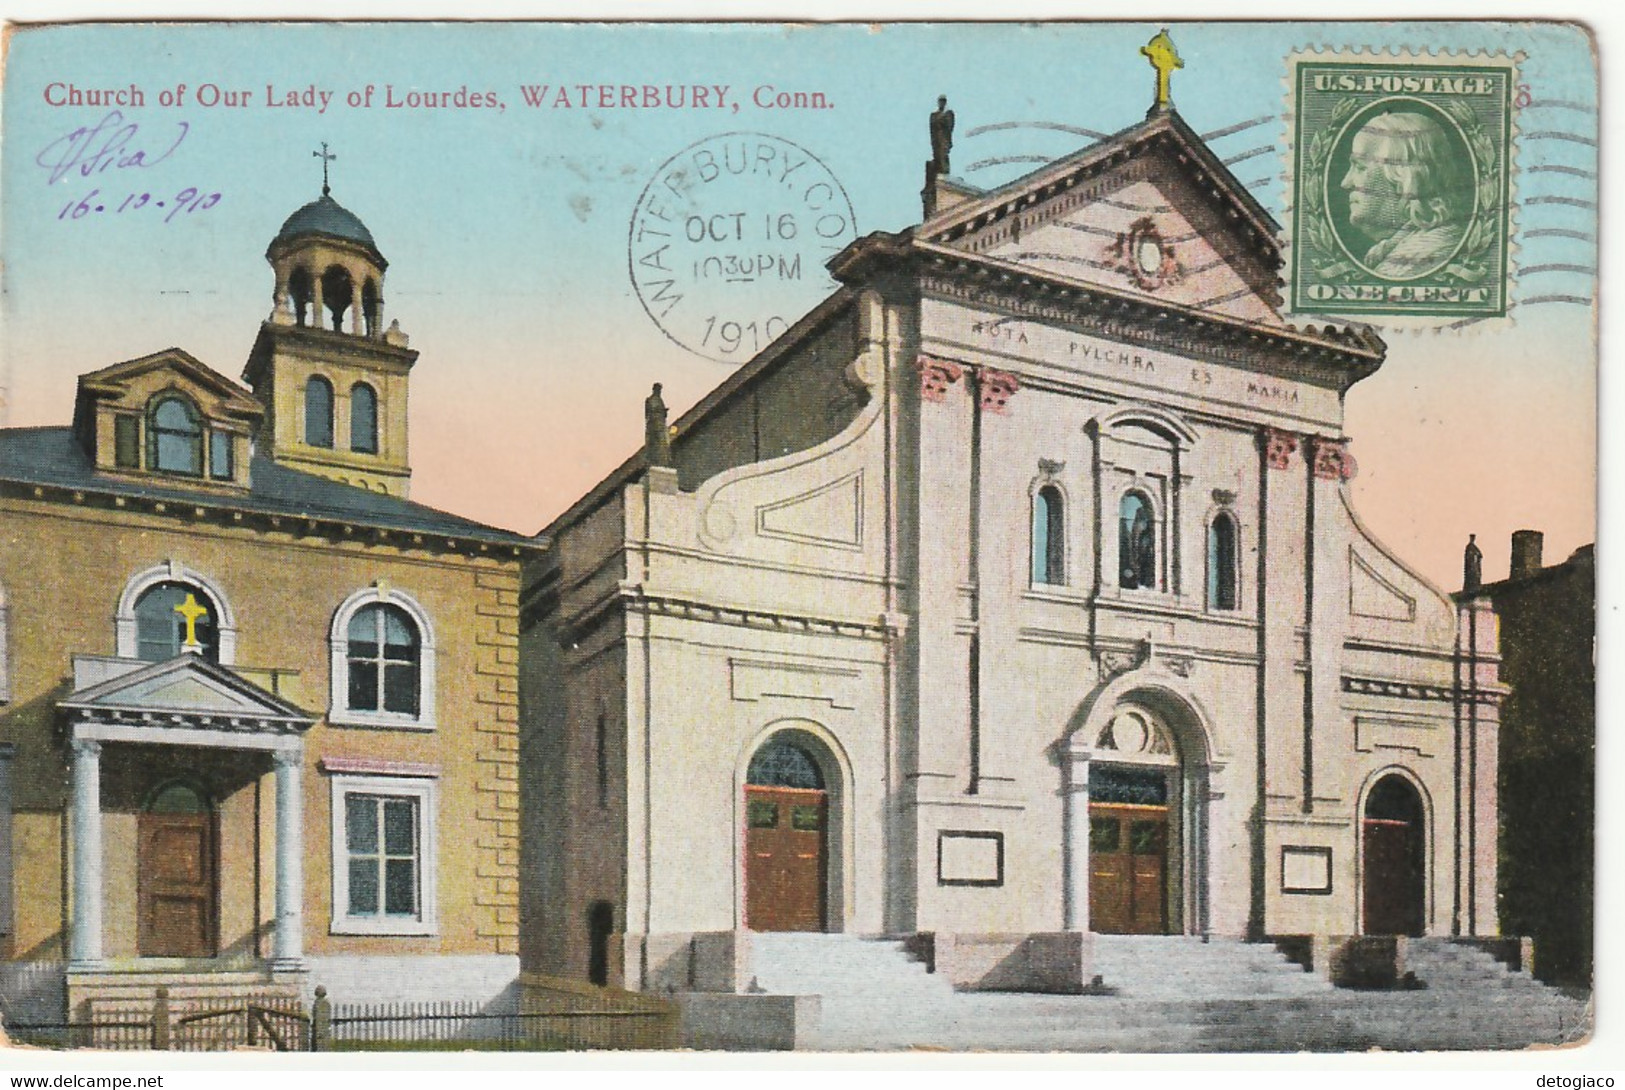 WATERBURY - CONN. - UNITED STATES - CHURCH OF OUR LADY OF LOURDES - VIAGG. 1910 -89114- - Waterbury